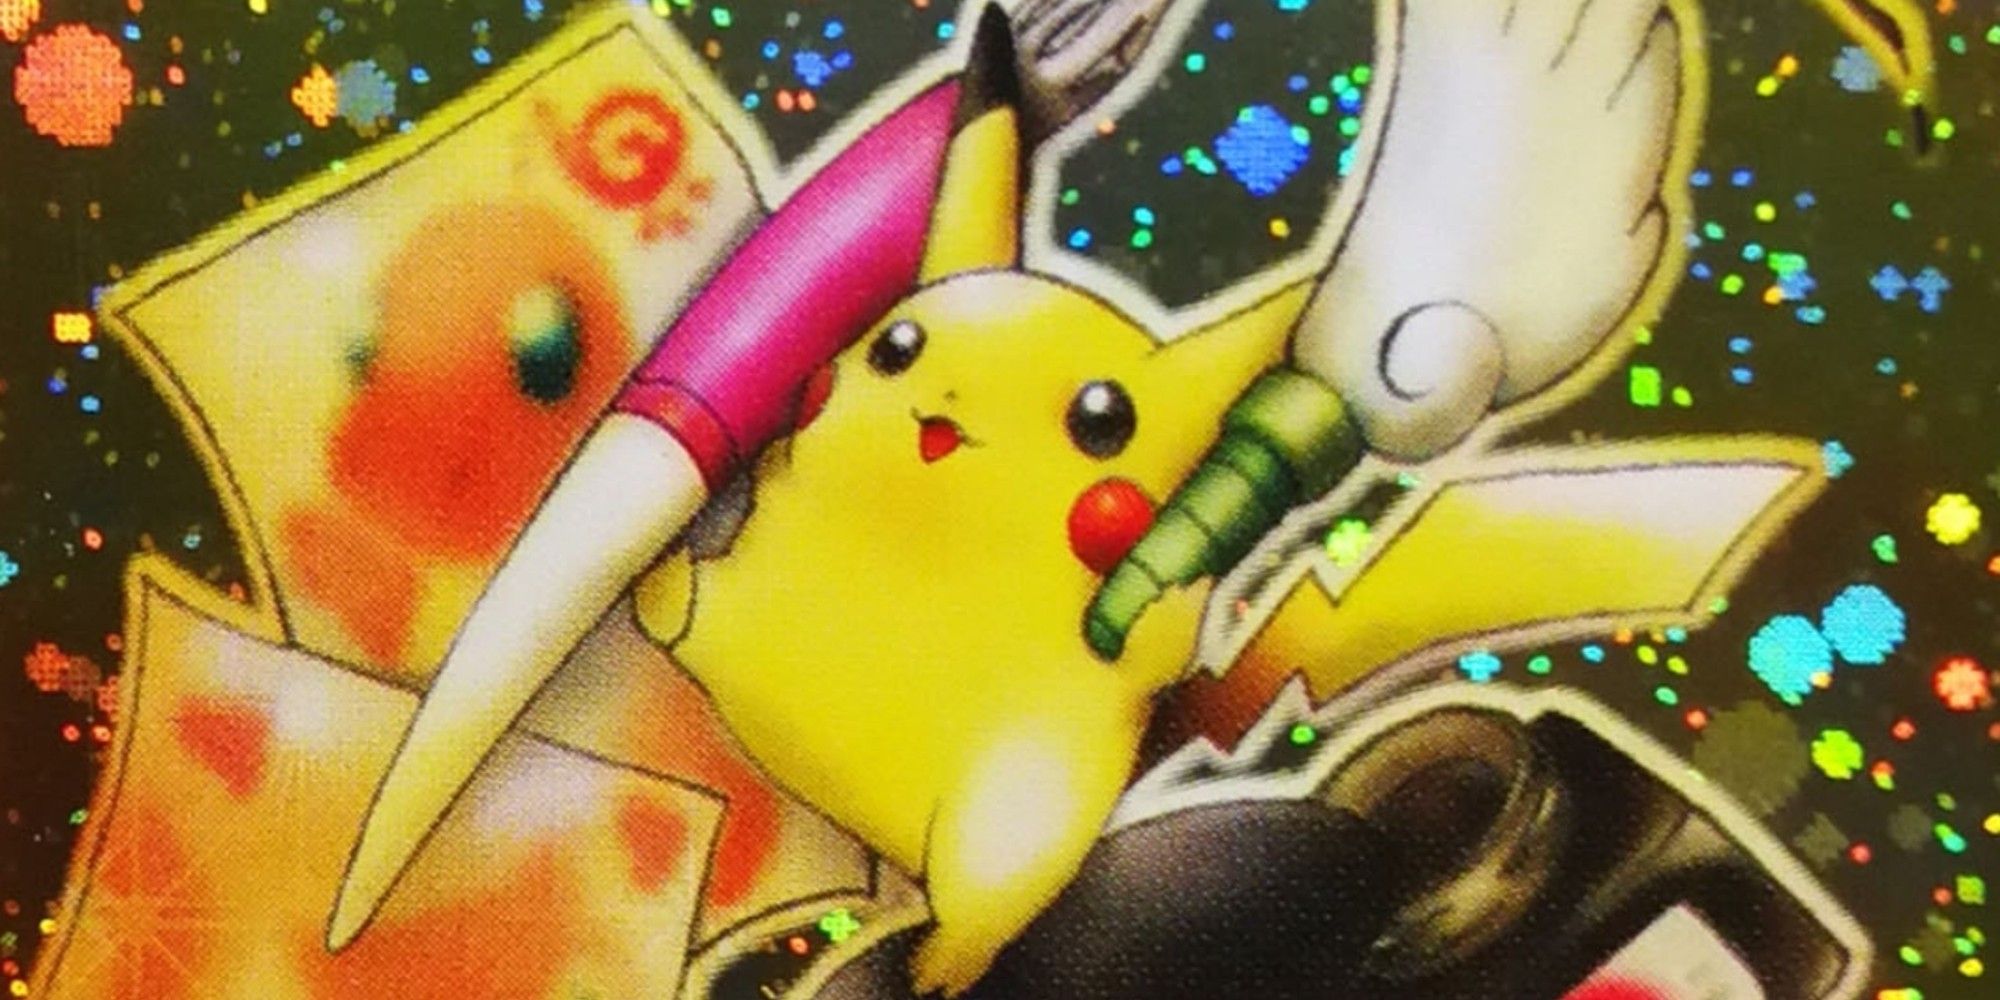 A Pikachu Illustrator Pokemon Card Just Sold For $2 Million